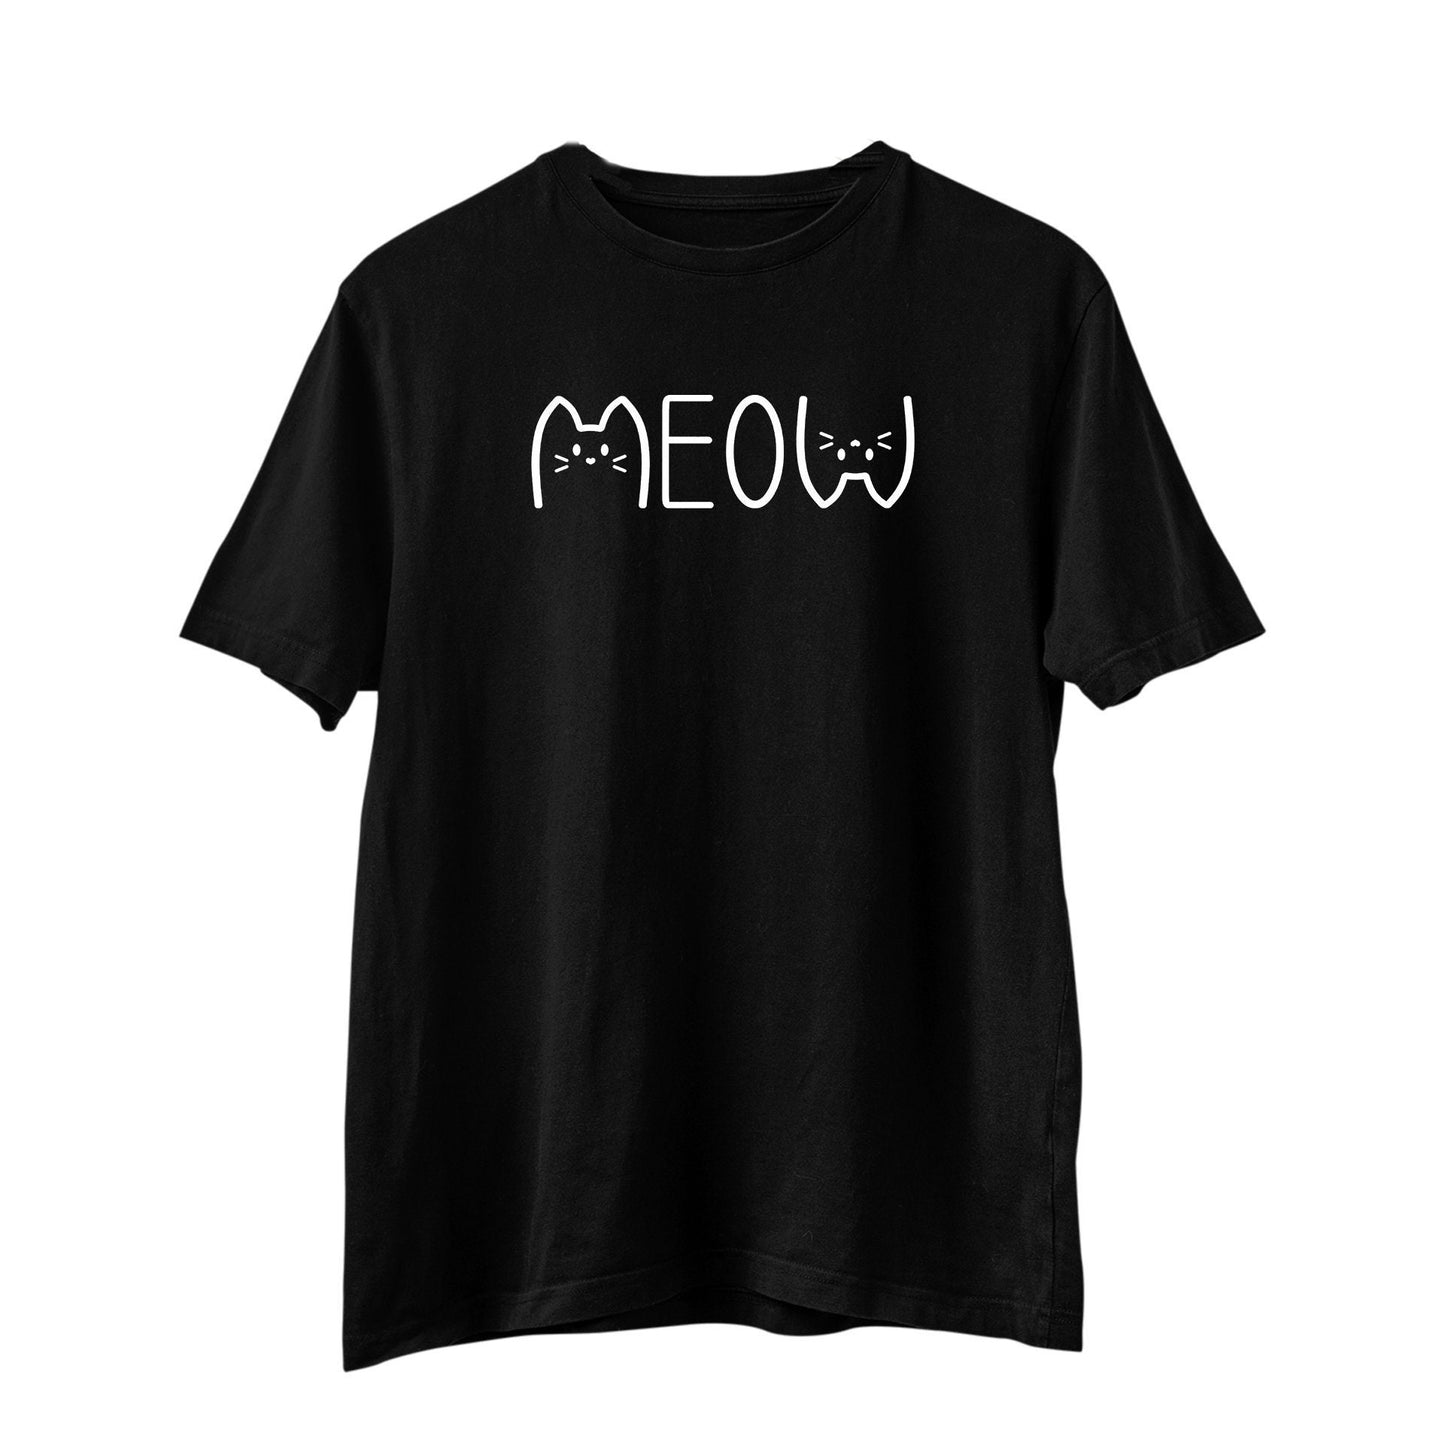 Meow T-Shirt, Cat T-Shirt, Gift for Cat Mom, Cat Lover Tee, Gifts for Cat Lovers,, Animal Lover Tee, Cat Gift, Novelty Shirt